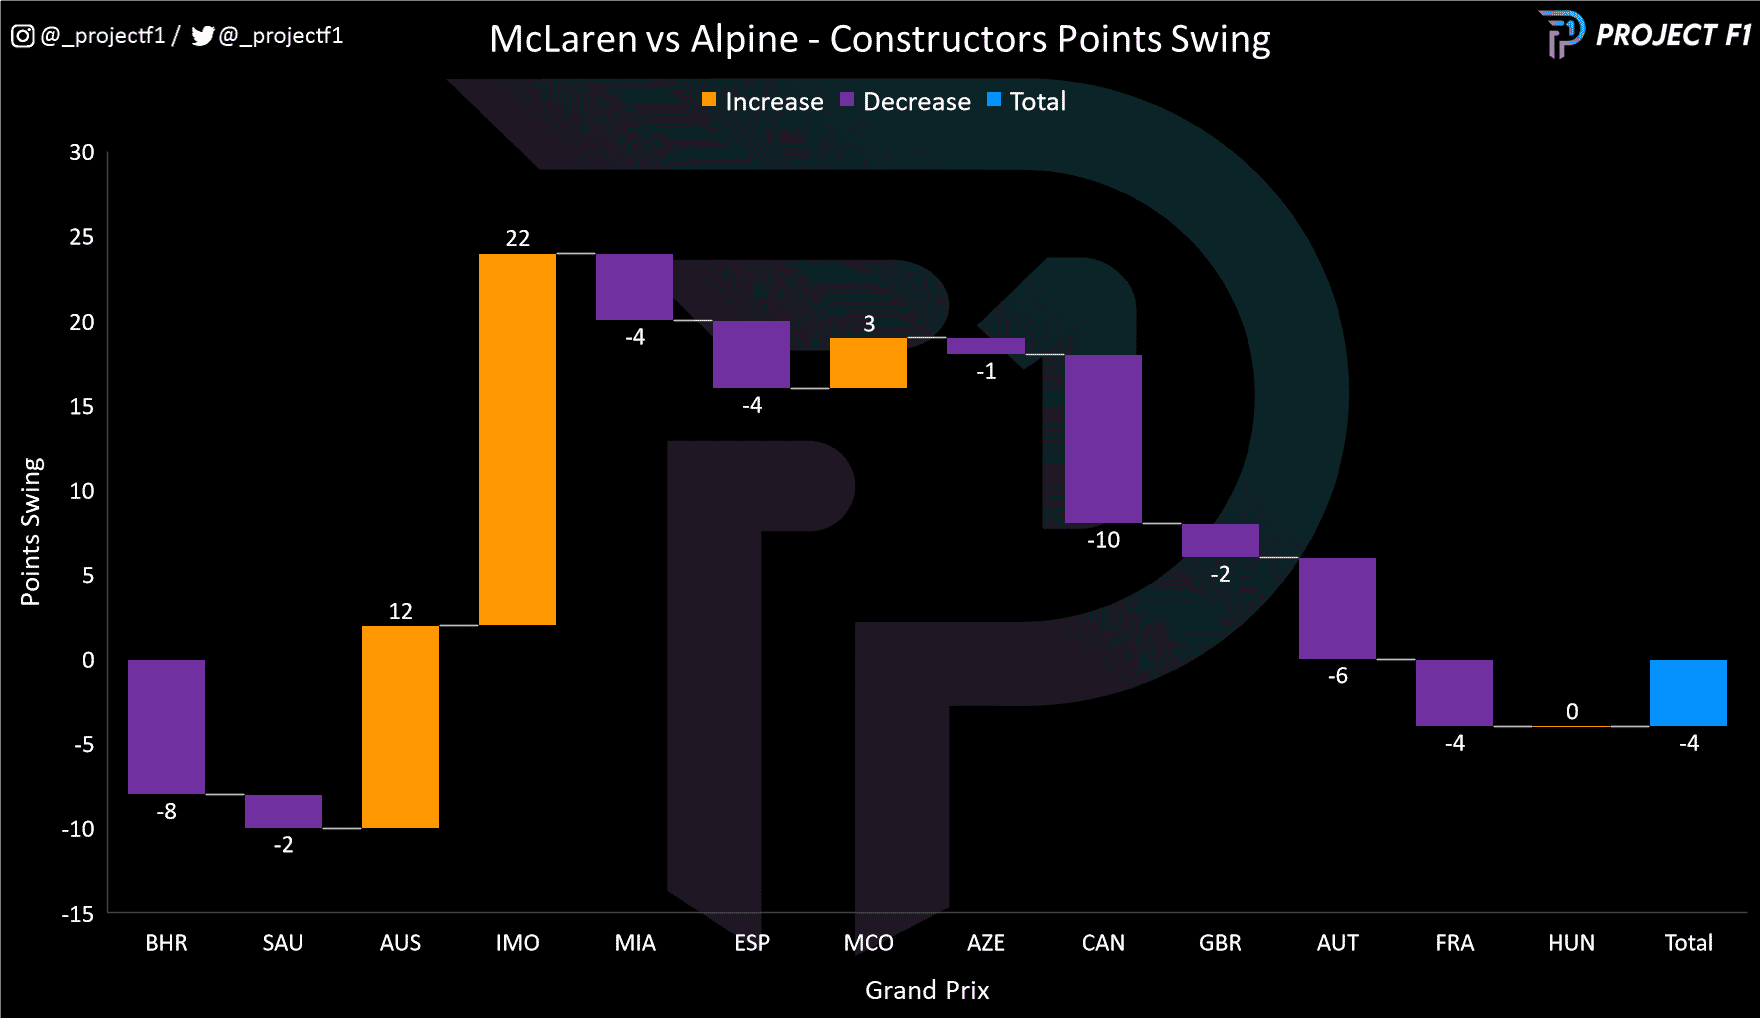 Chart to show the constructors' points swing between McLaren and Alpine